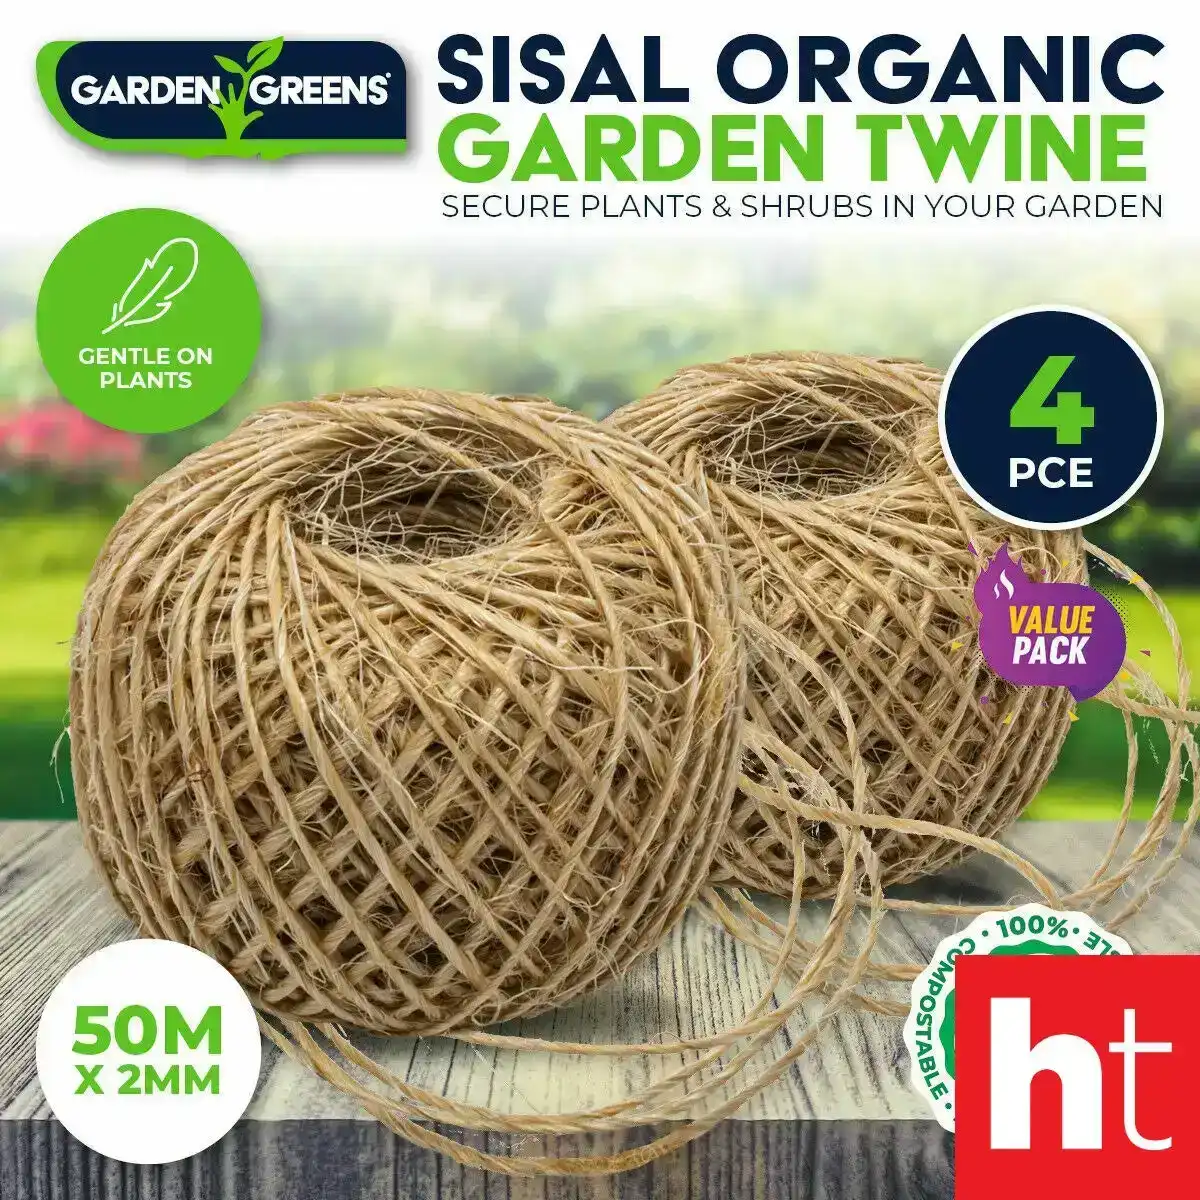 Garden Greens 4PK Garden Twine Sisal Versatile Organic Gentle 50m x 2mm